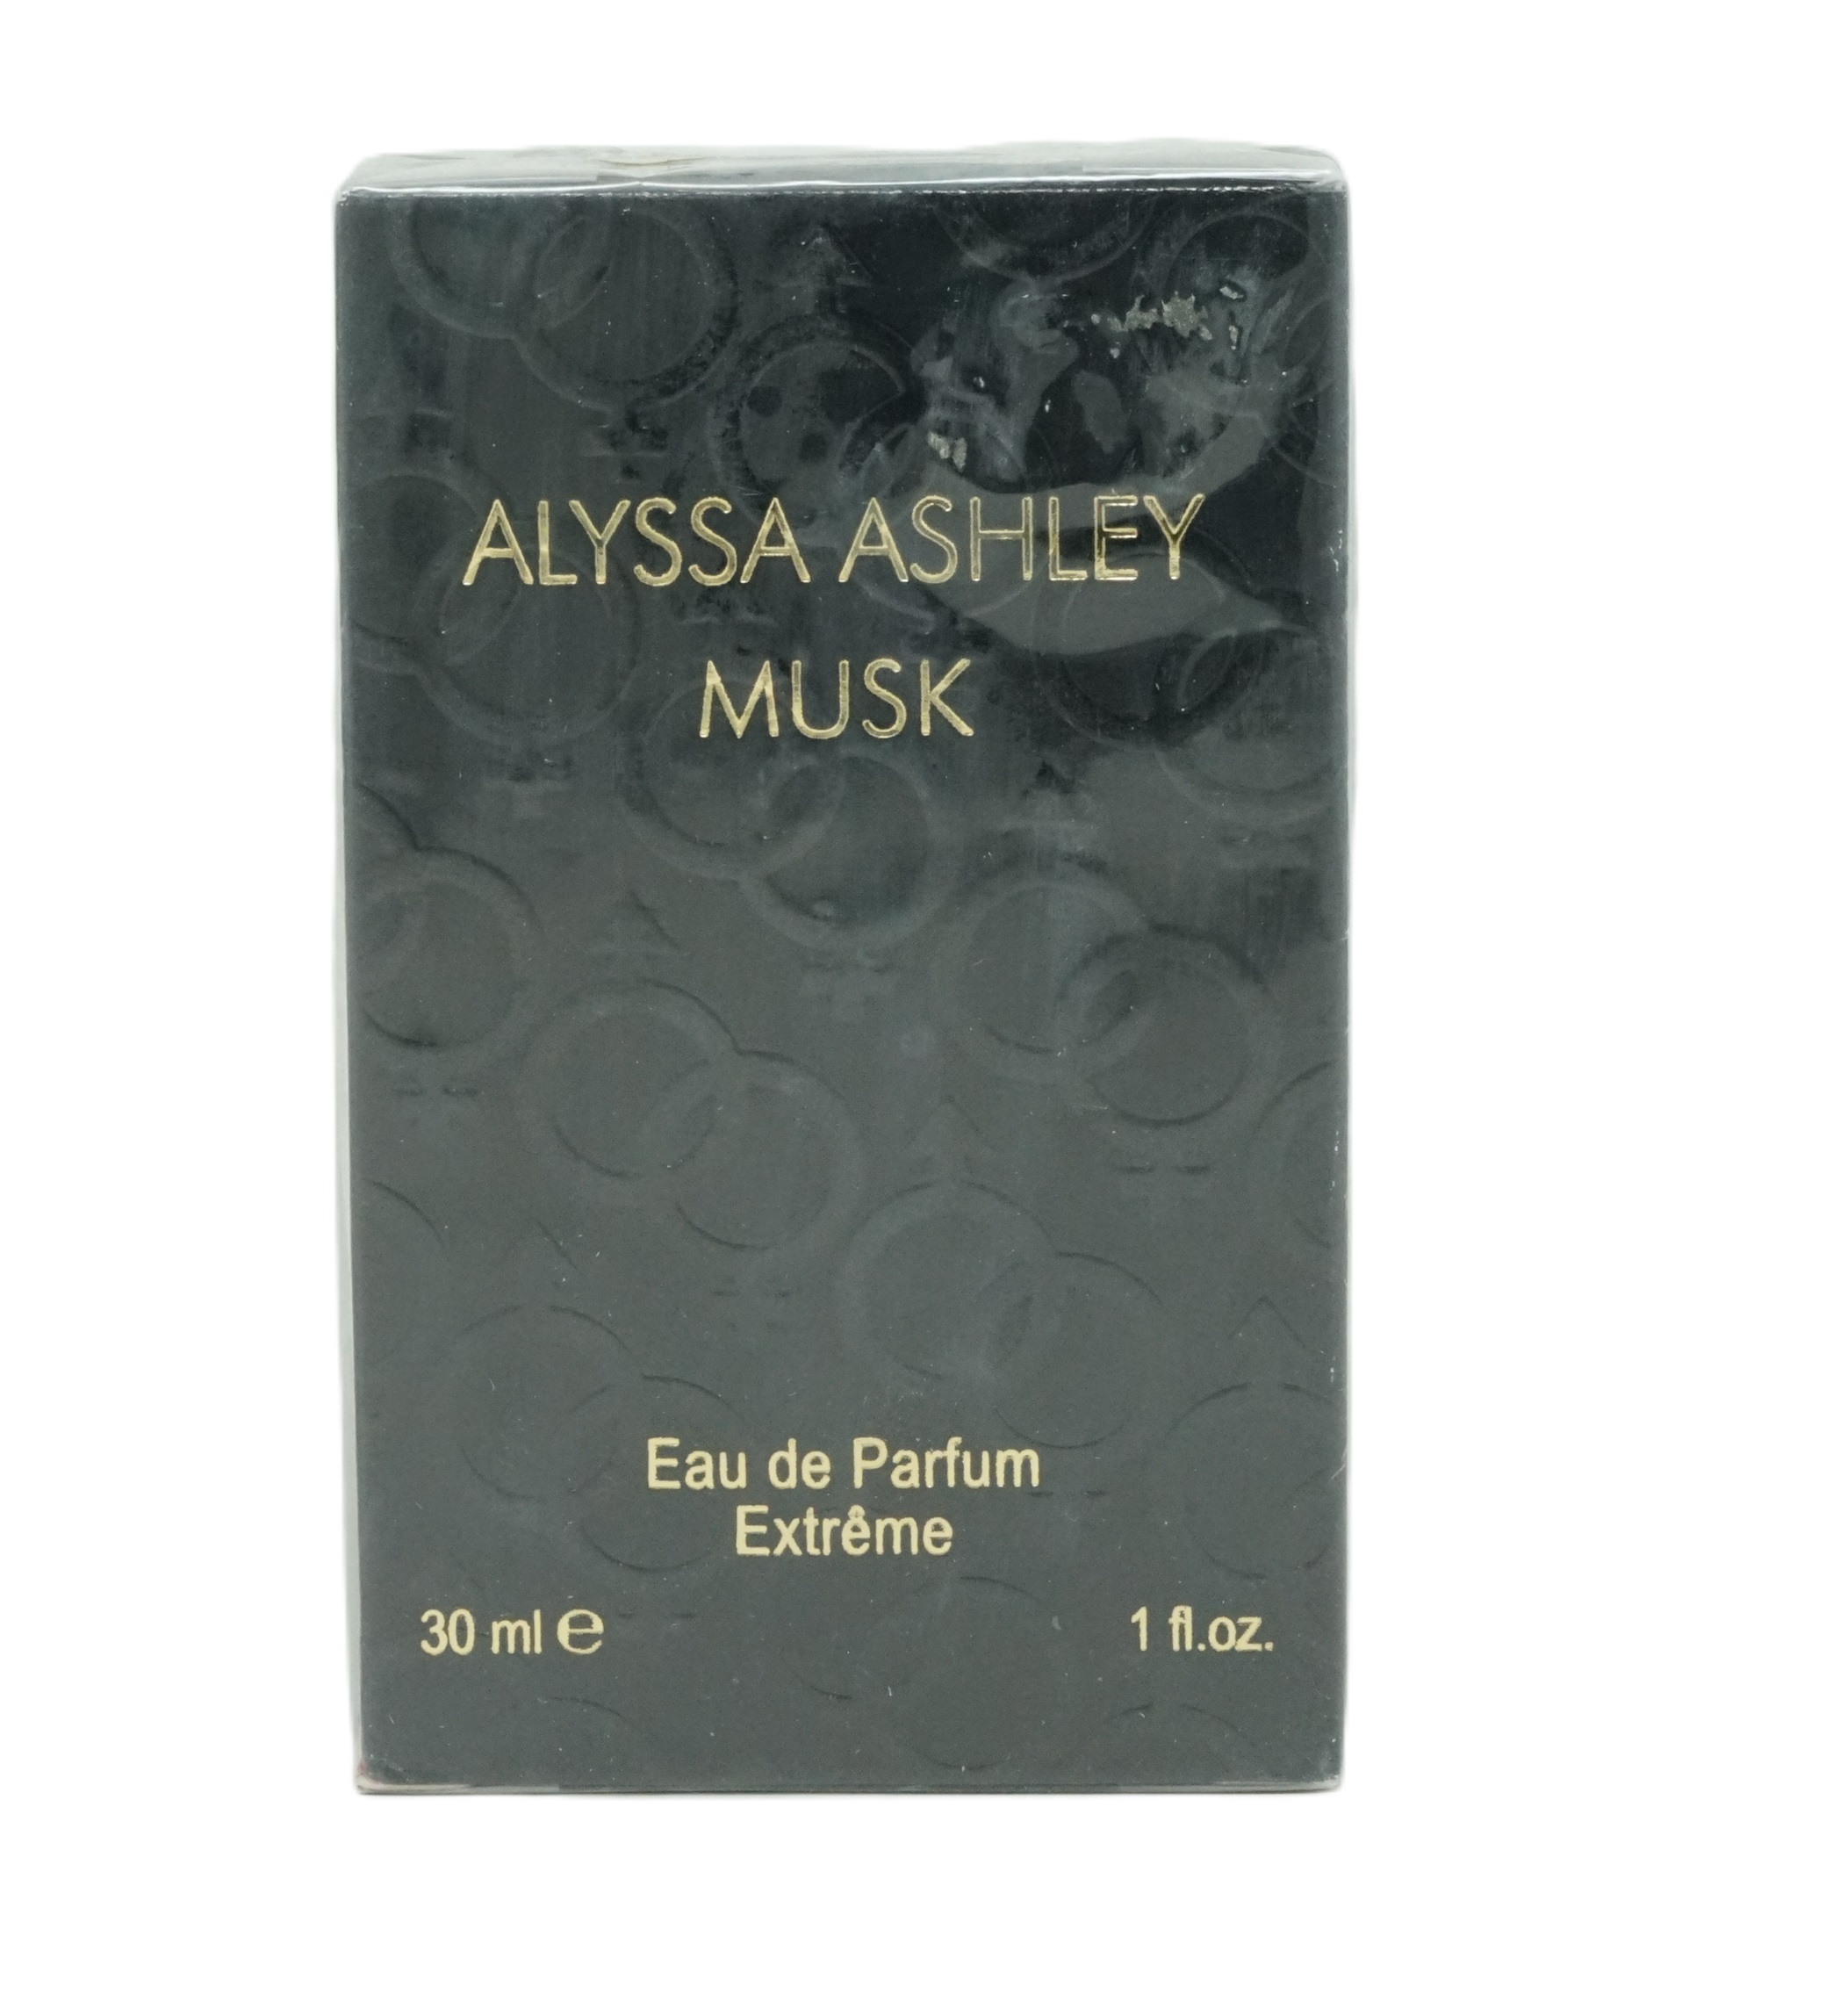 Alyssa Ashley Musk Extreme Eau de Parfum 30ml